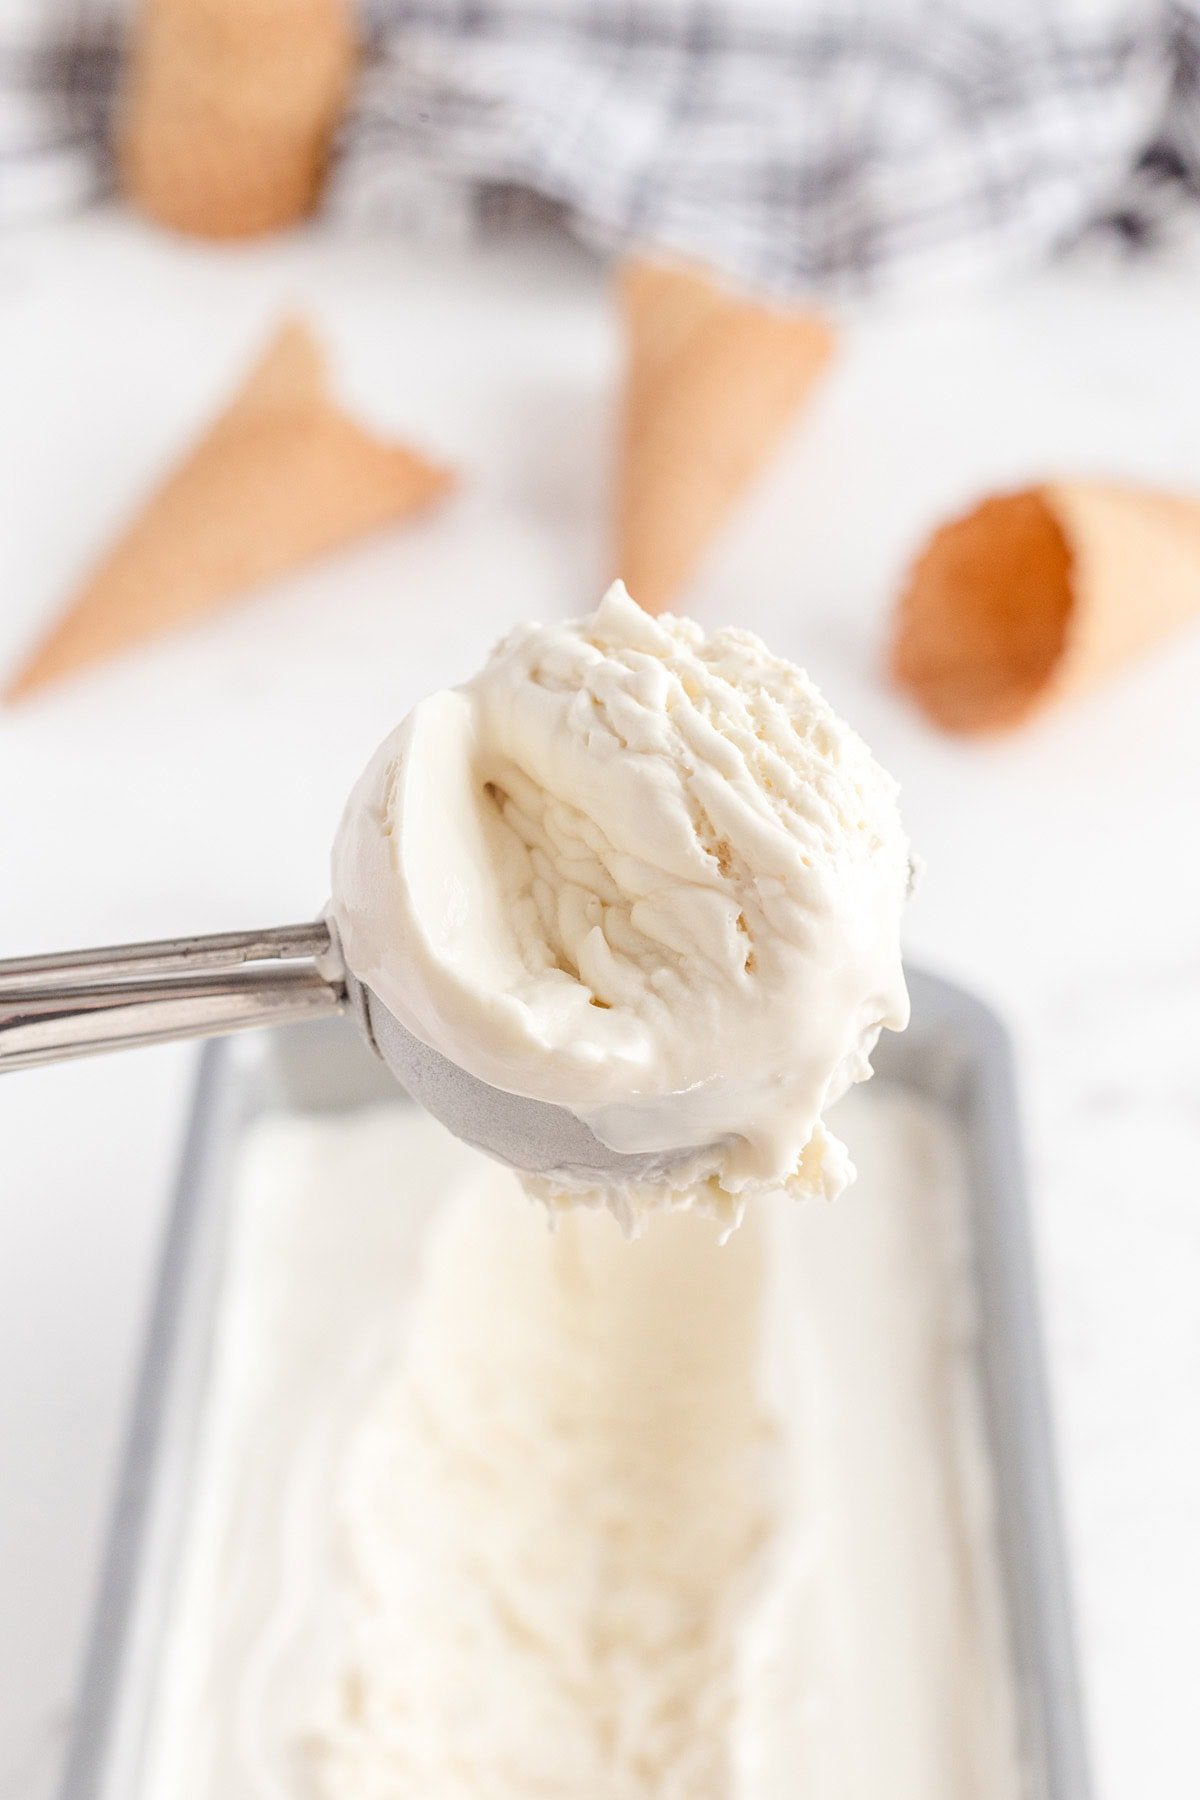 a scoop of vanilla ice cream.